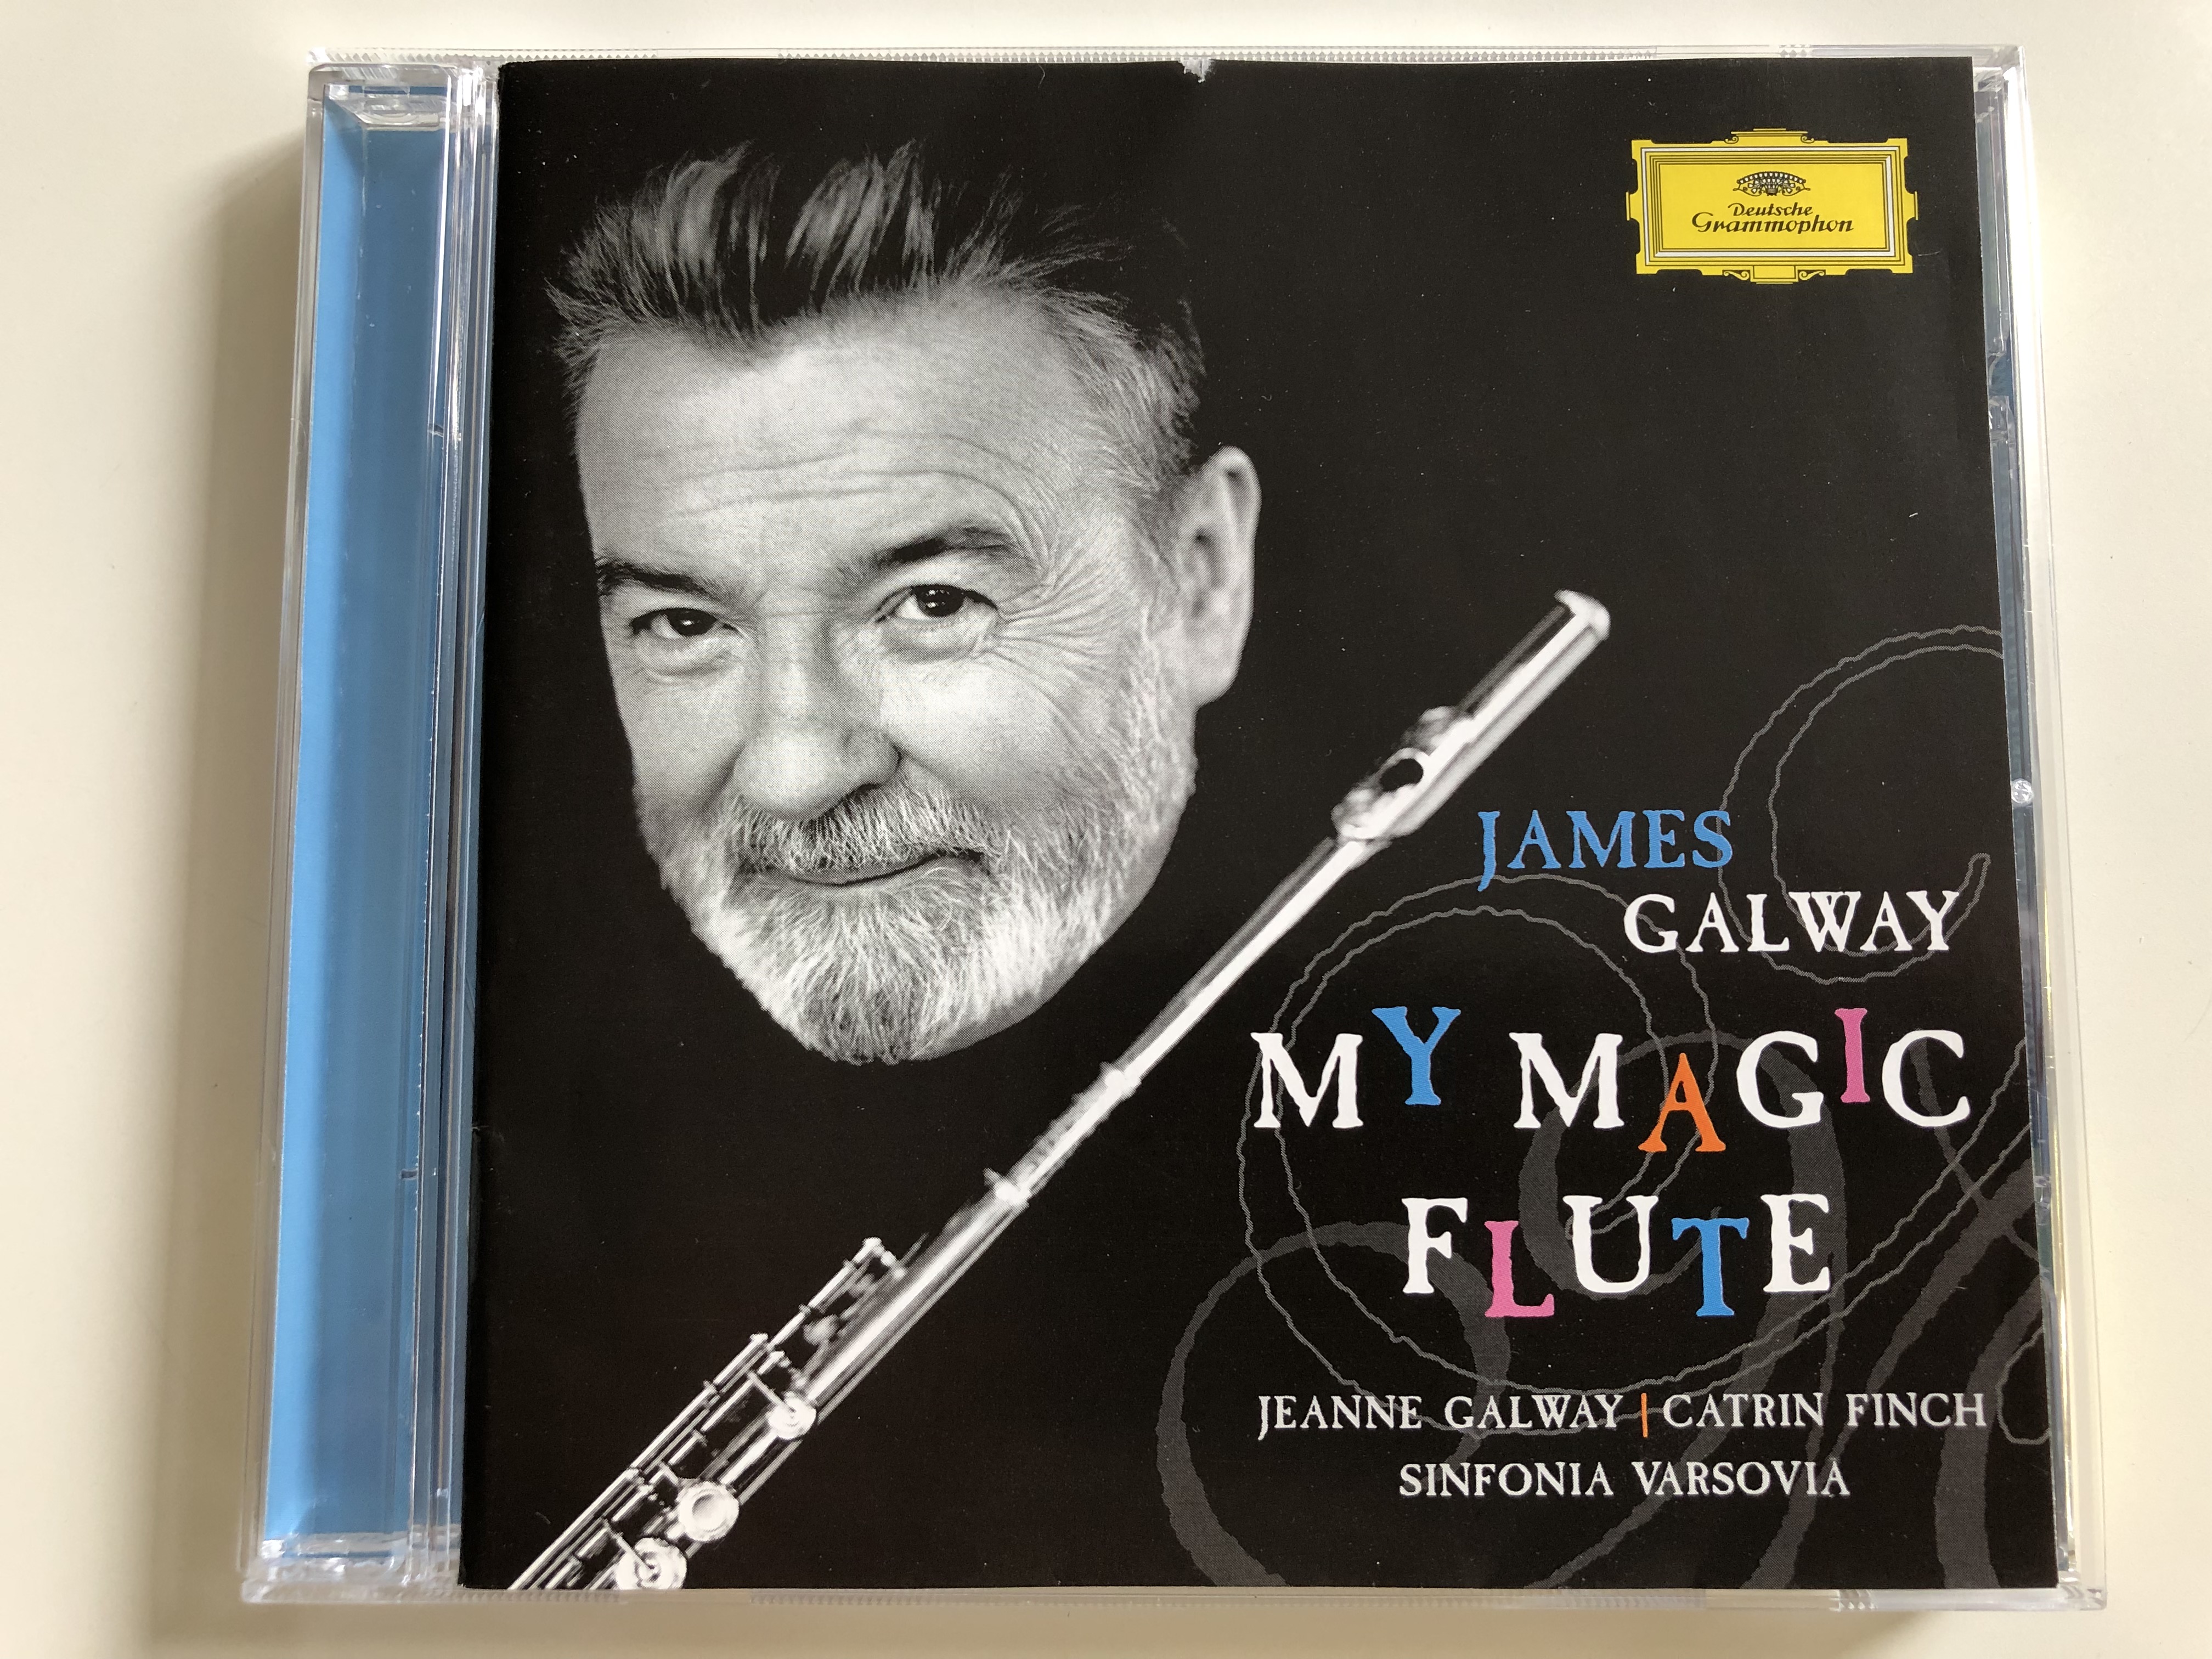 james-galway-my-magic-flute-jeanne-galway-catrin-finch-sinfonia-varsovia-deutsche-grammophon-audio-cd-2006-2-.jpg